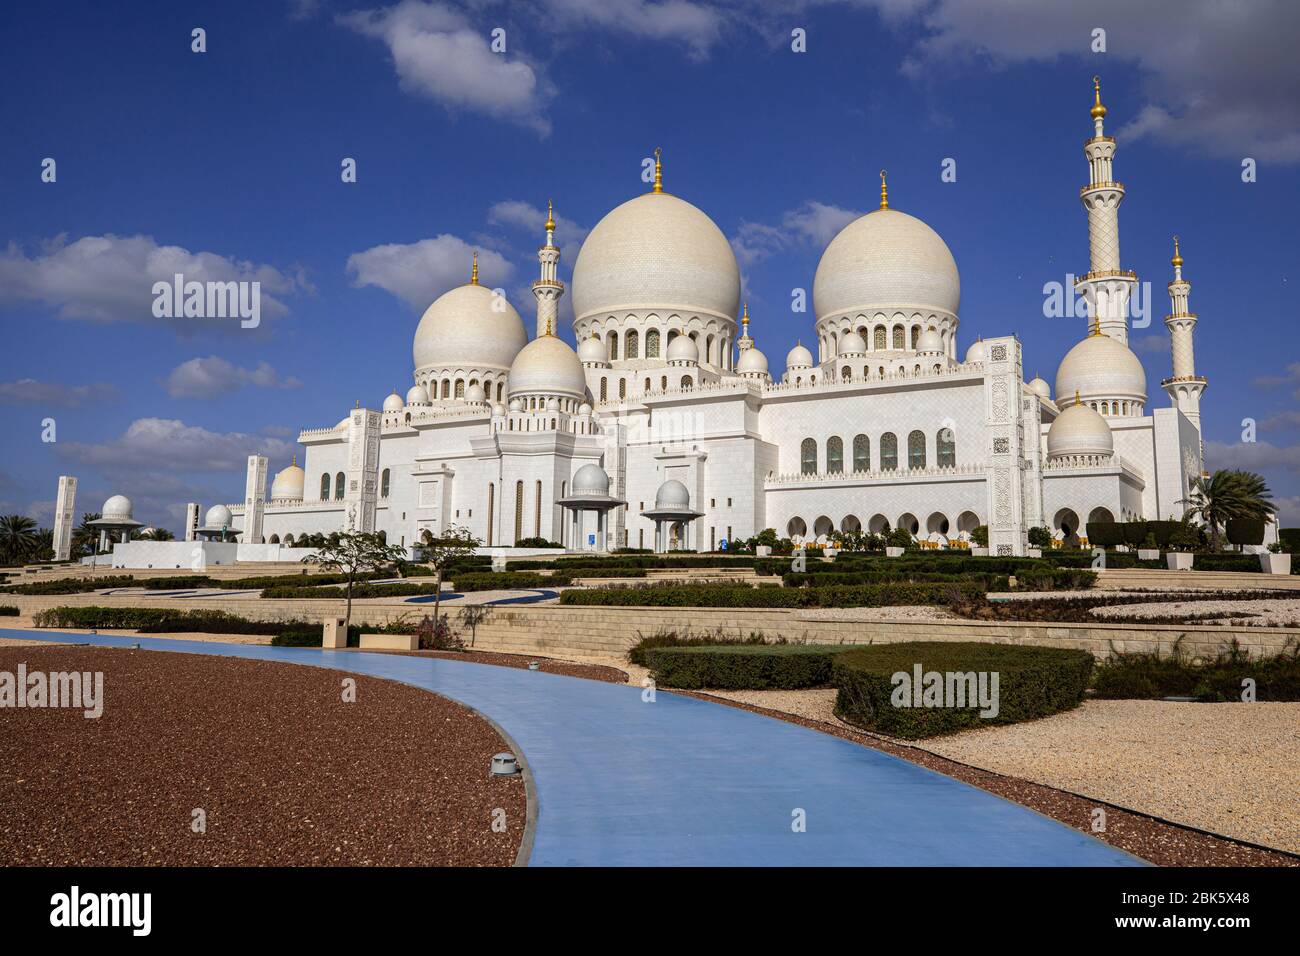 Sheikh Zayed Grand Mosque in Abu Dhabi, United Arab Emirates Stock Photo